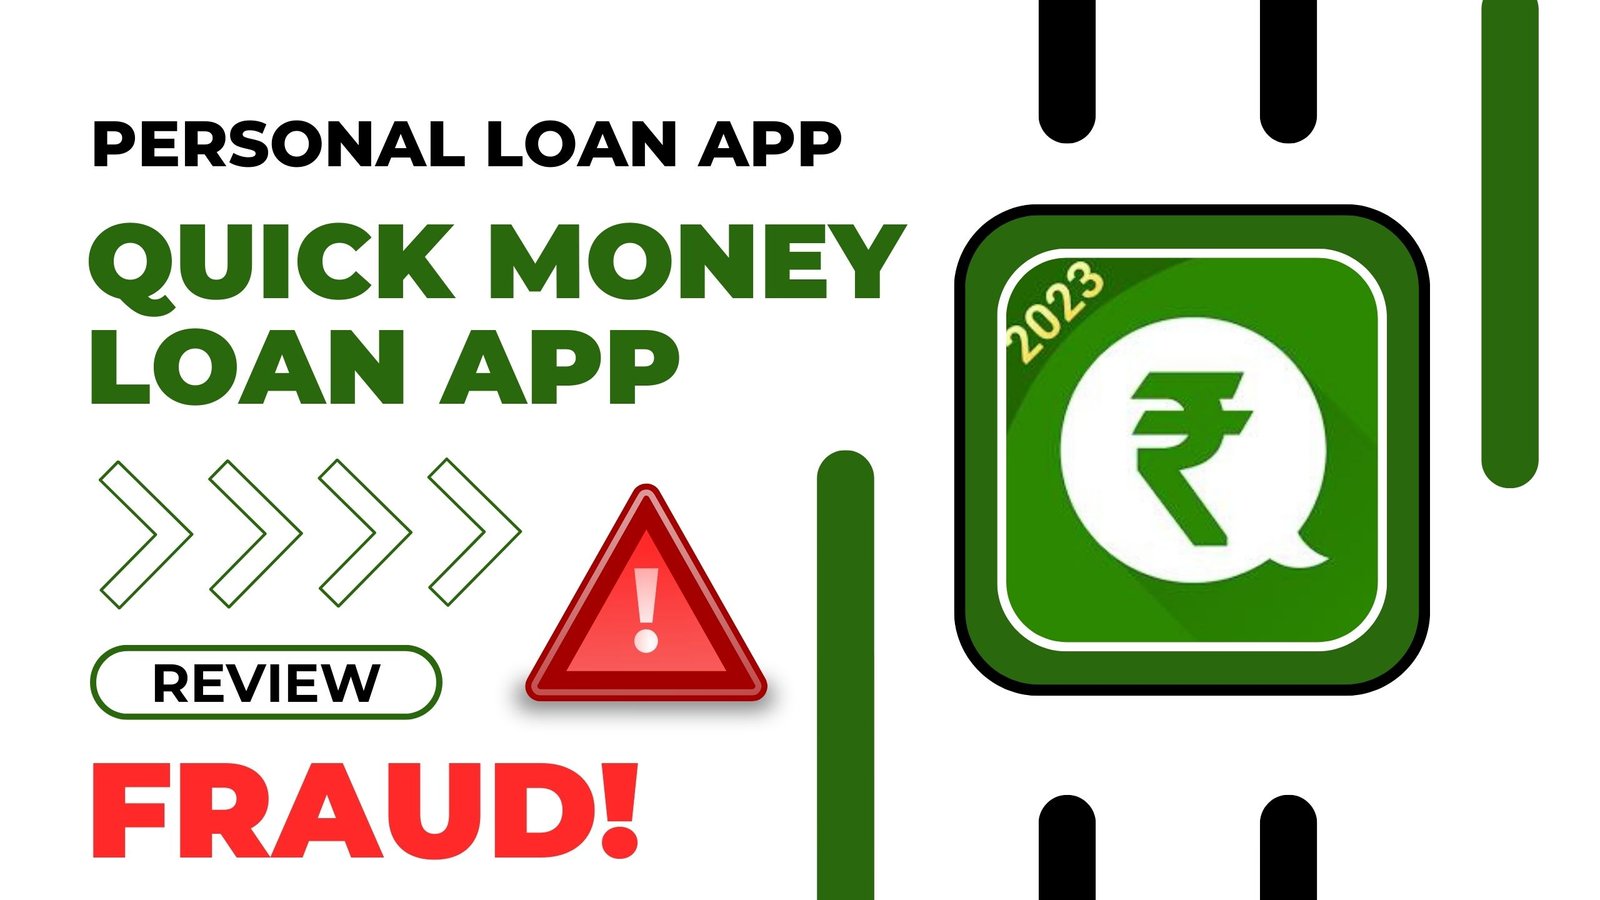 Quick Money Loan App Review